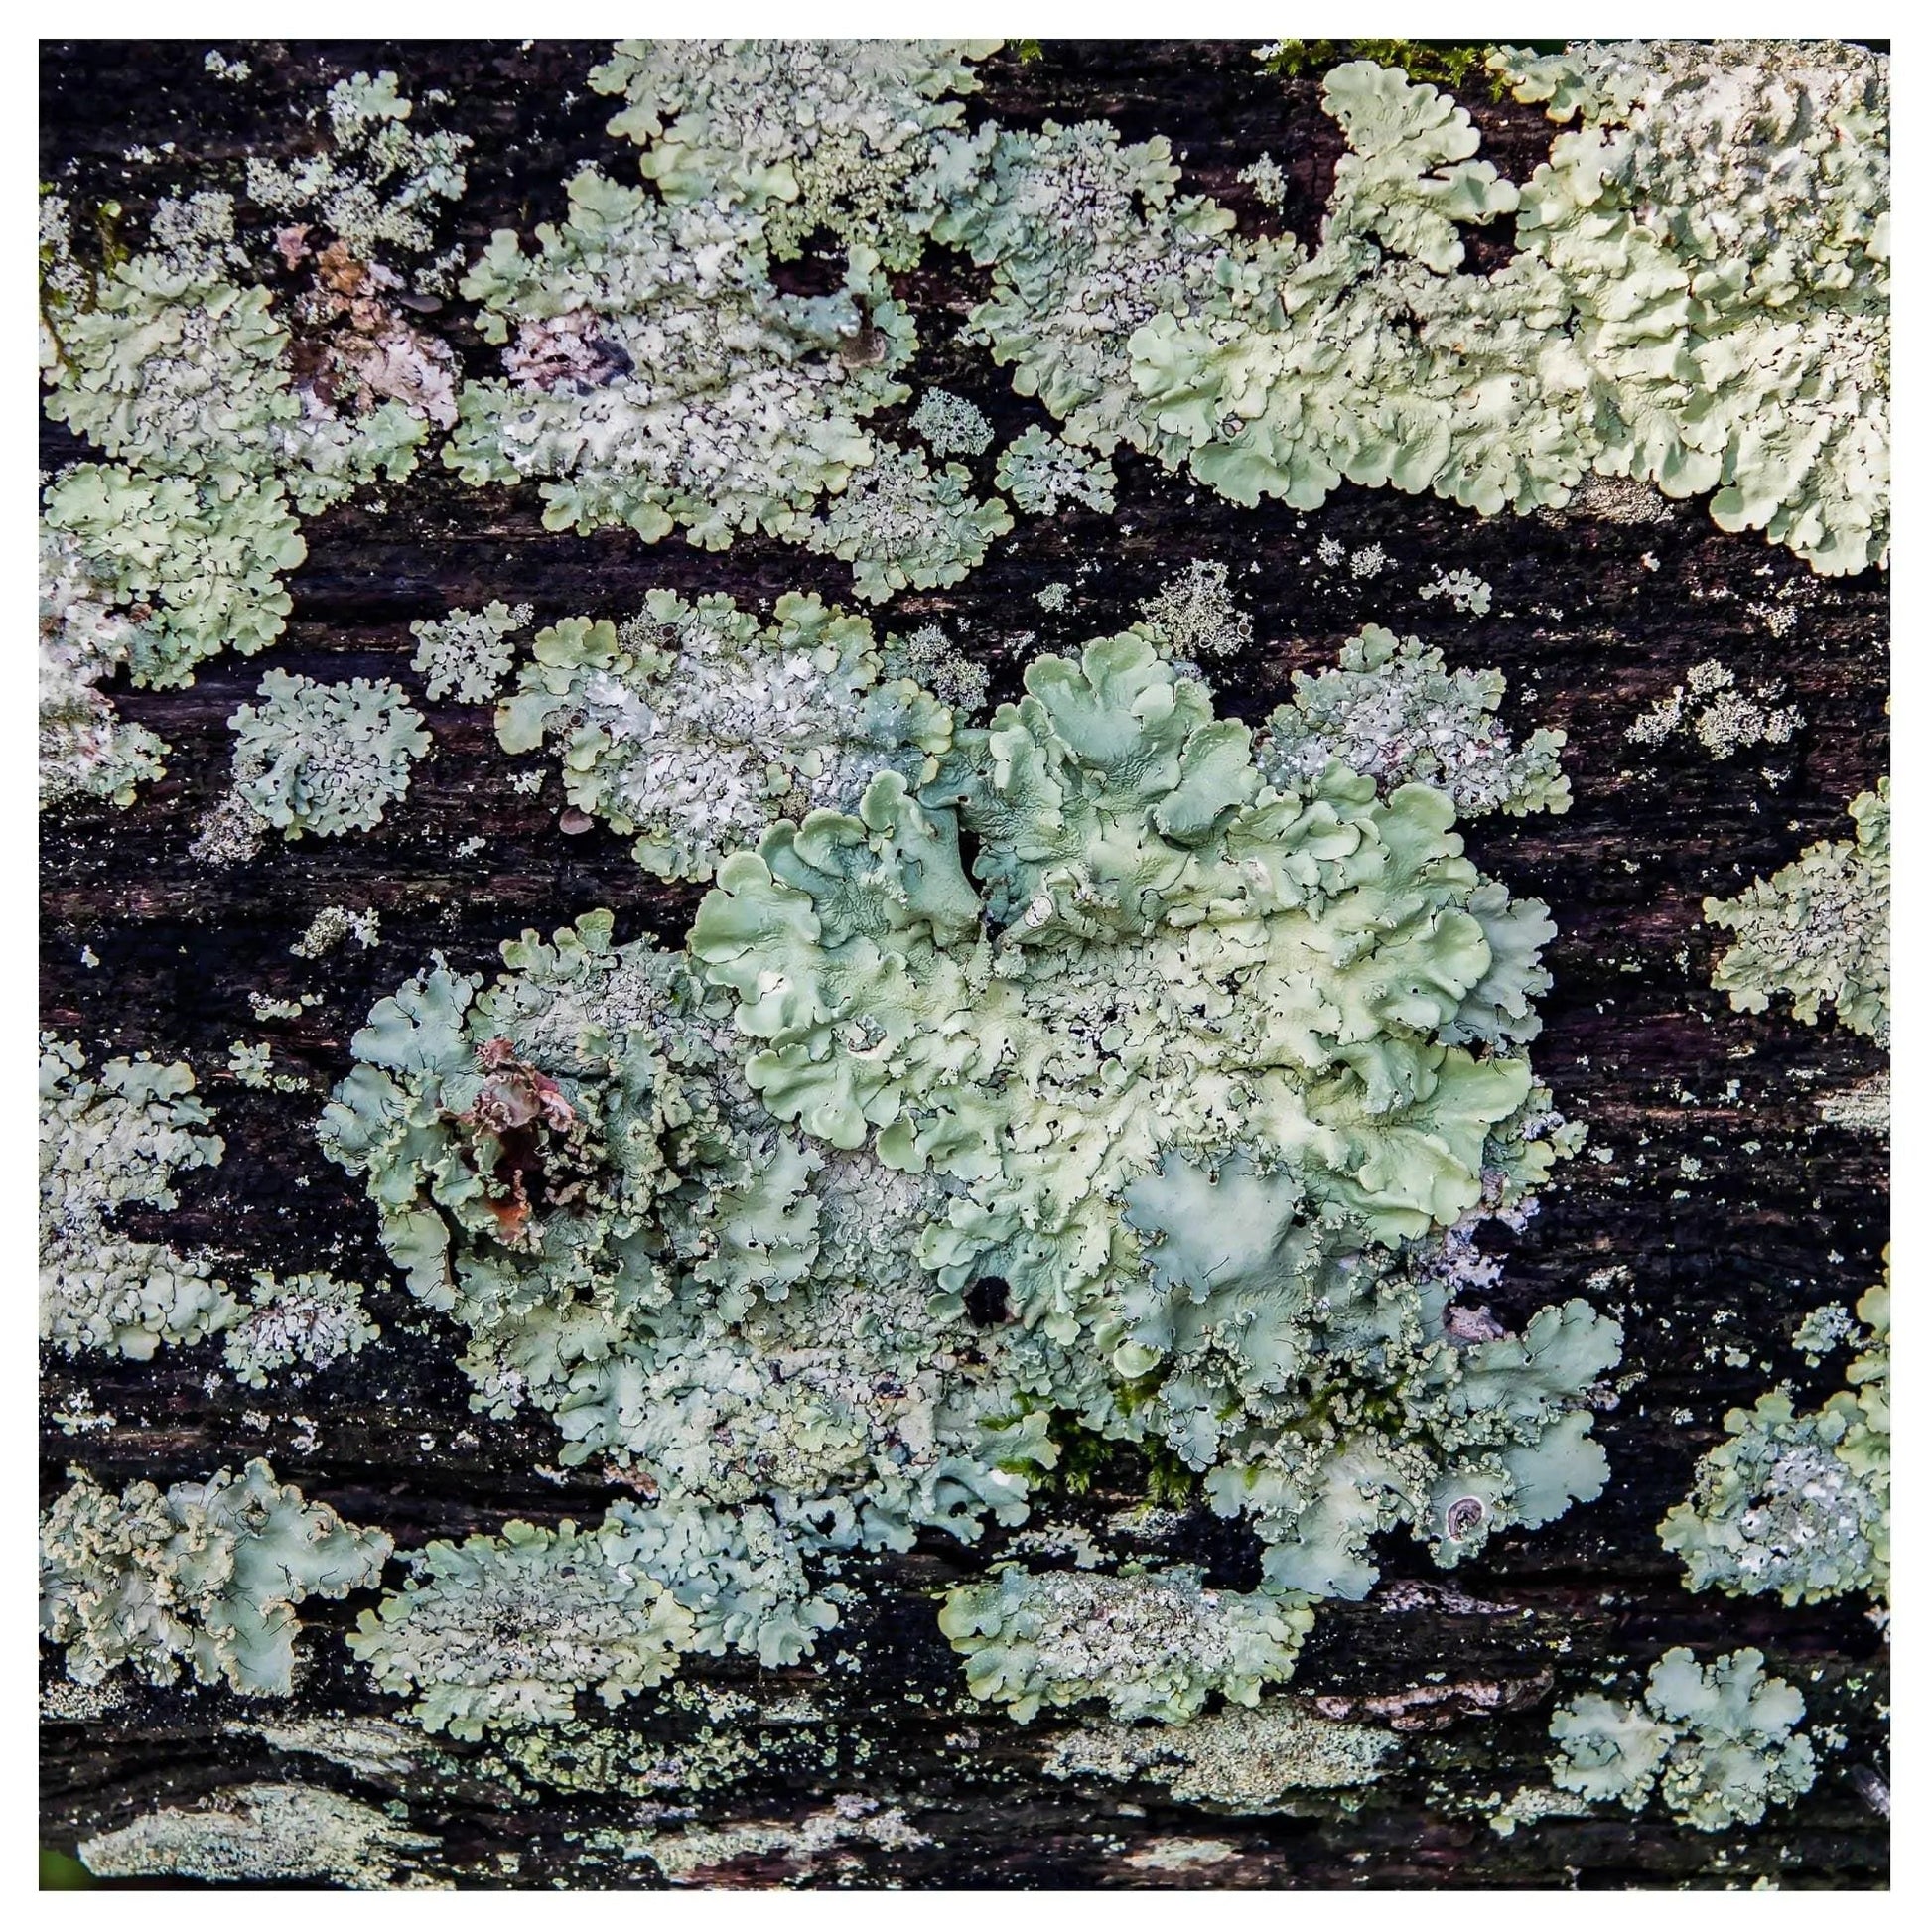 Closeup of lichen found on old wood